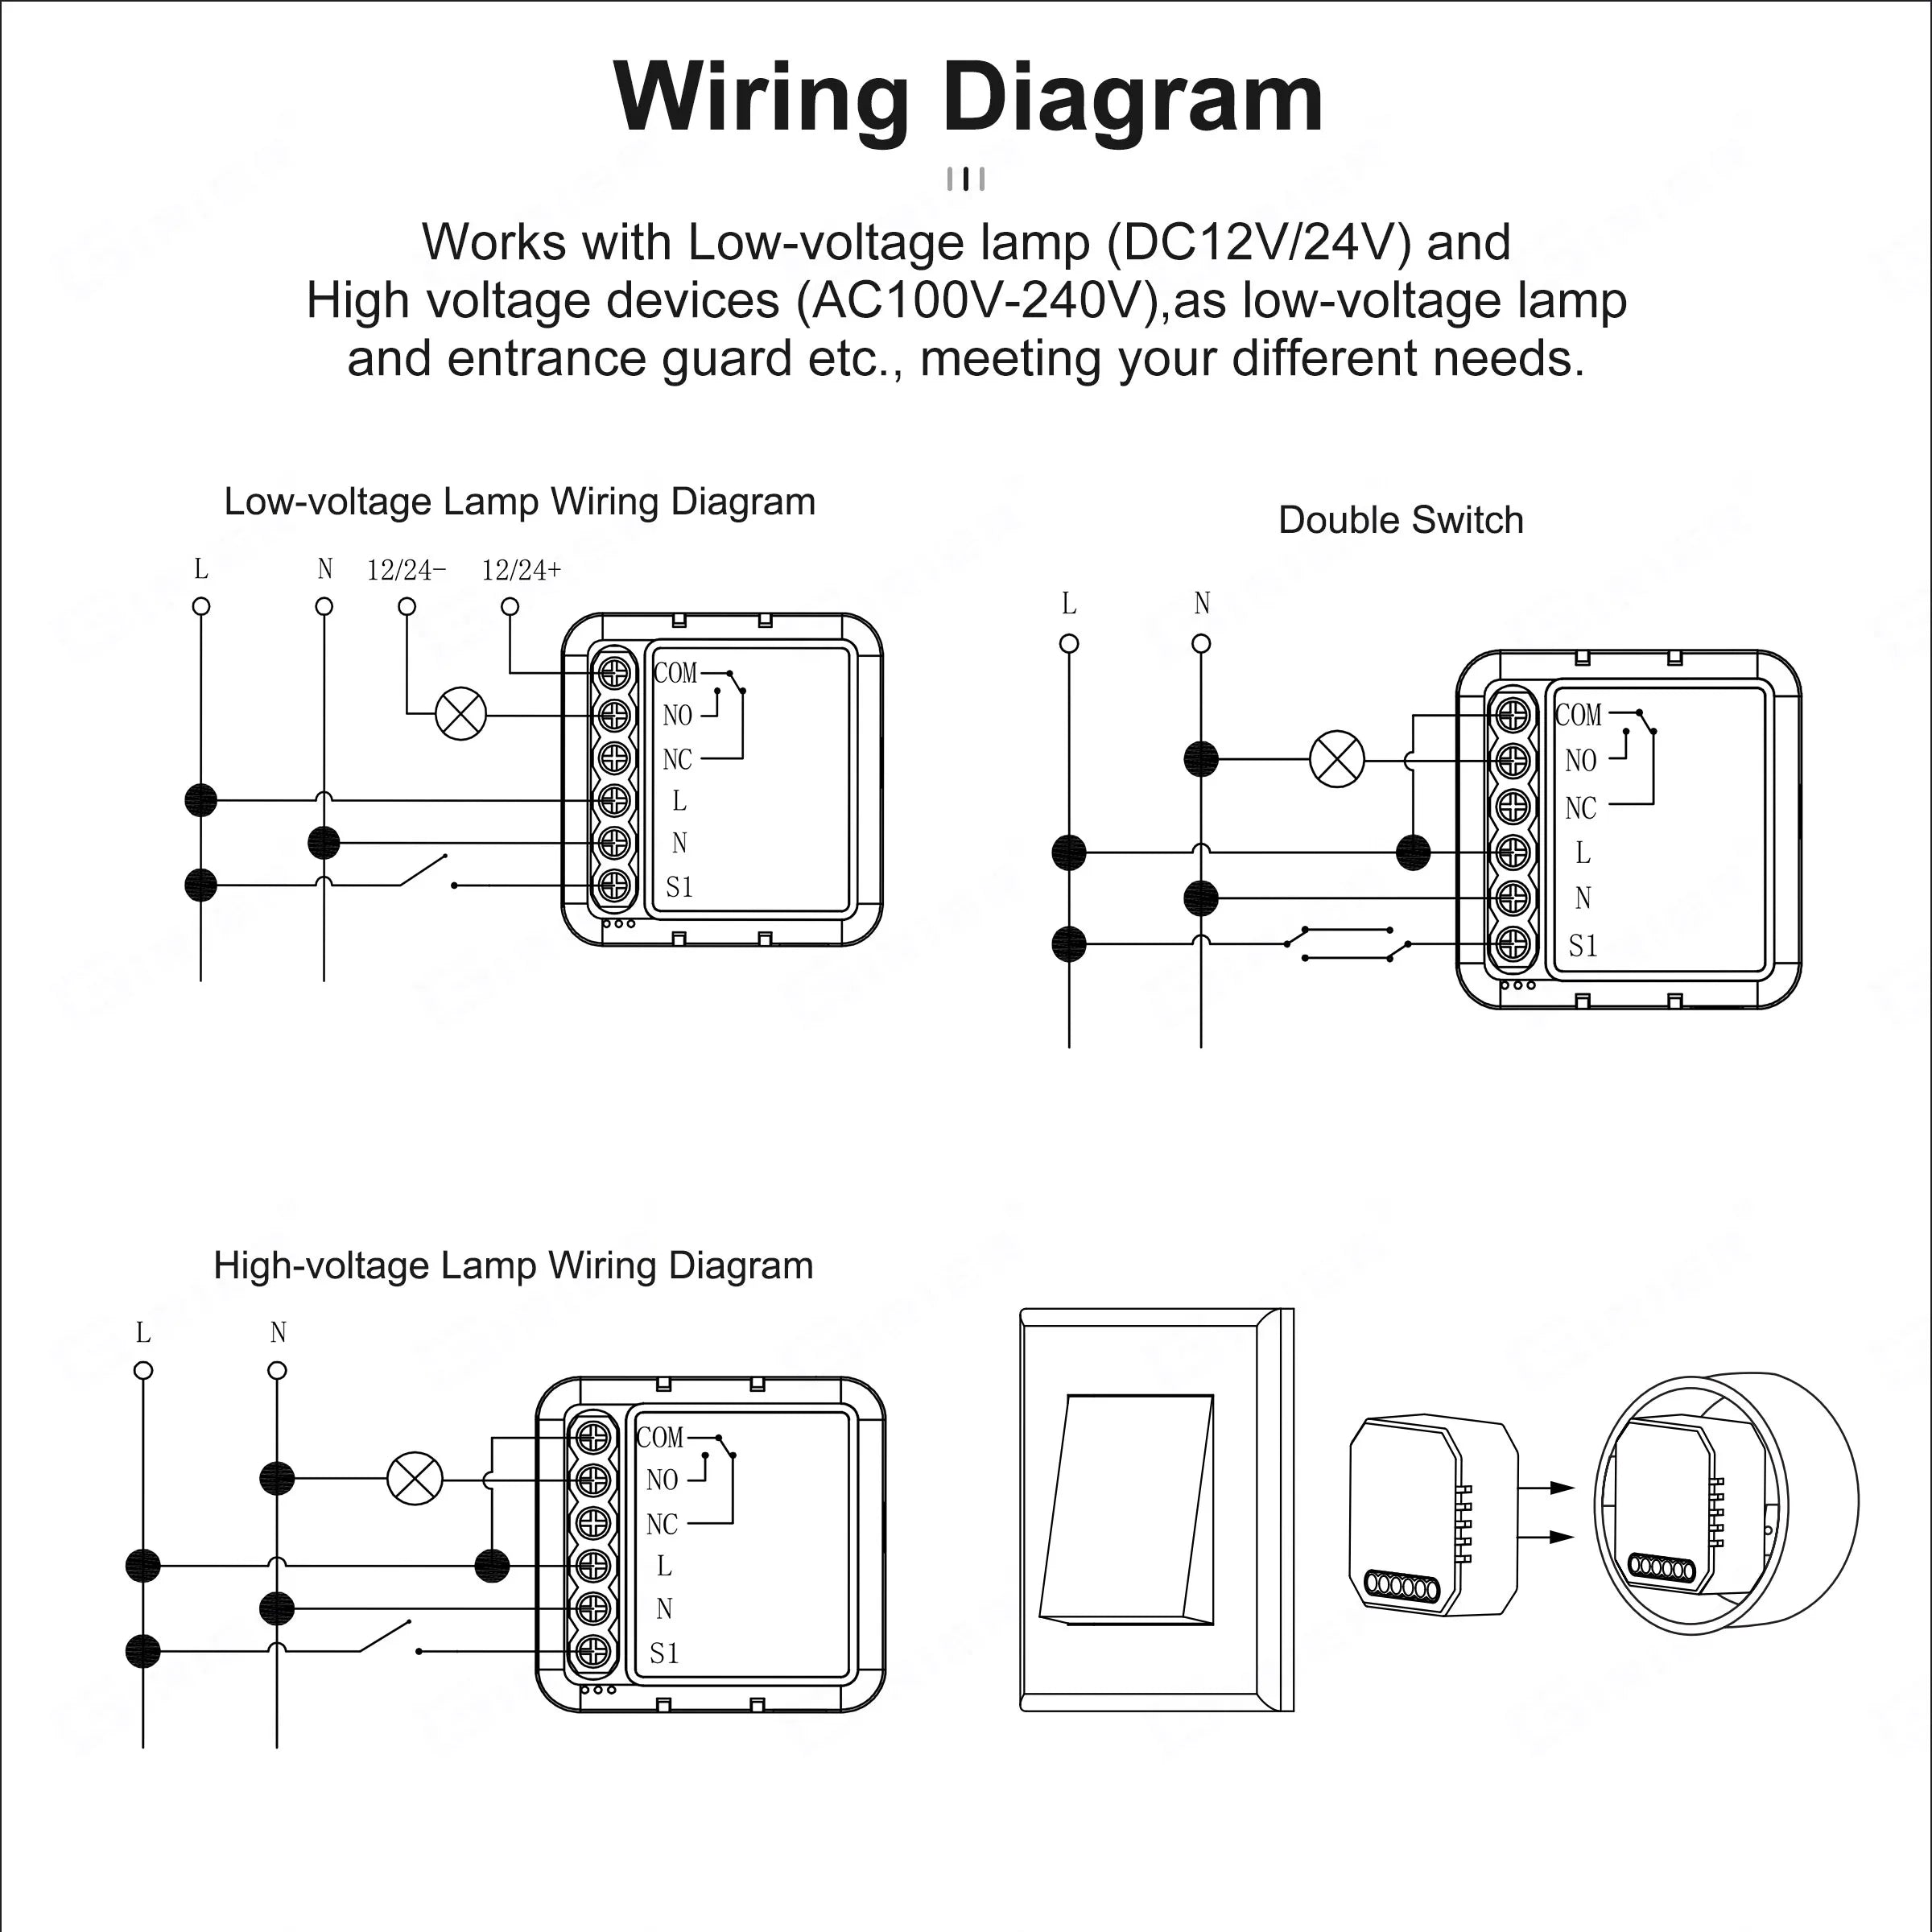 GIRIER Smart ZigBee Switch Module Dry Contact 5A Universal Breaker Relay DC 12/24V AC 100-240V Works with Alexa Alice Hey Google